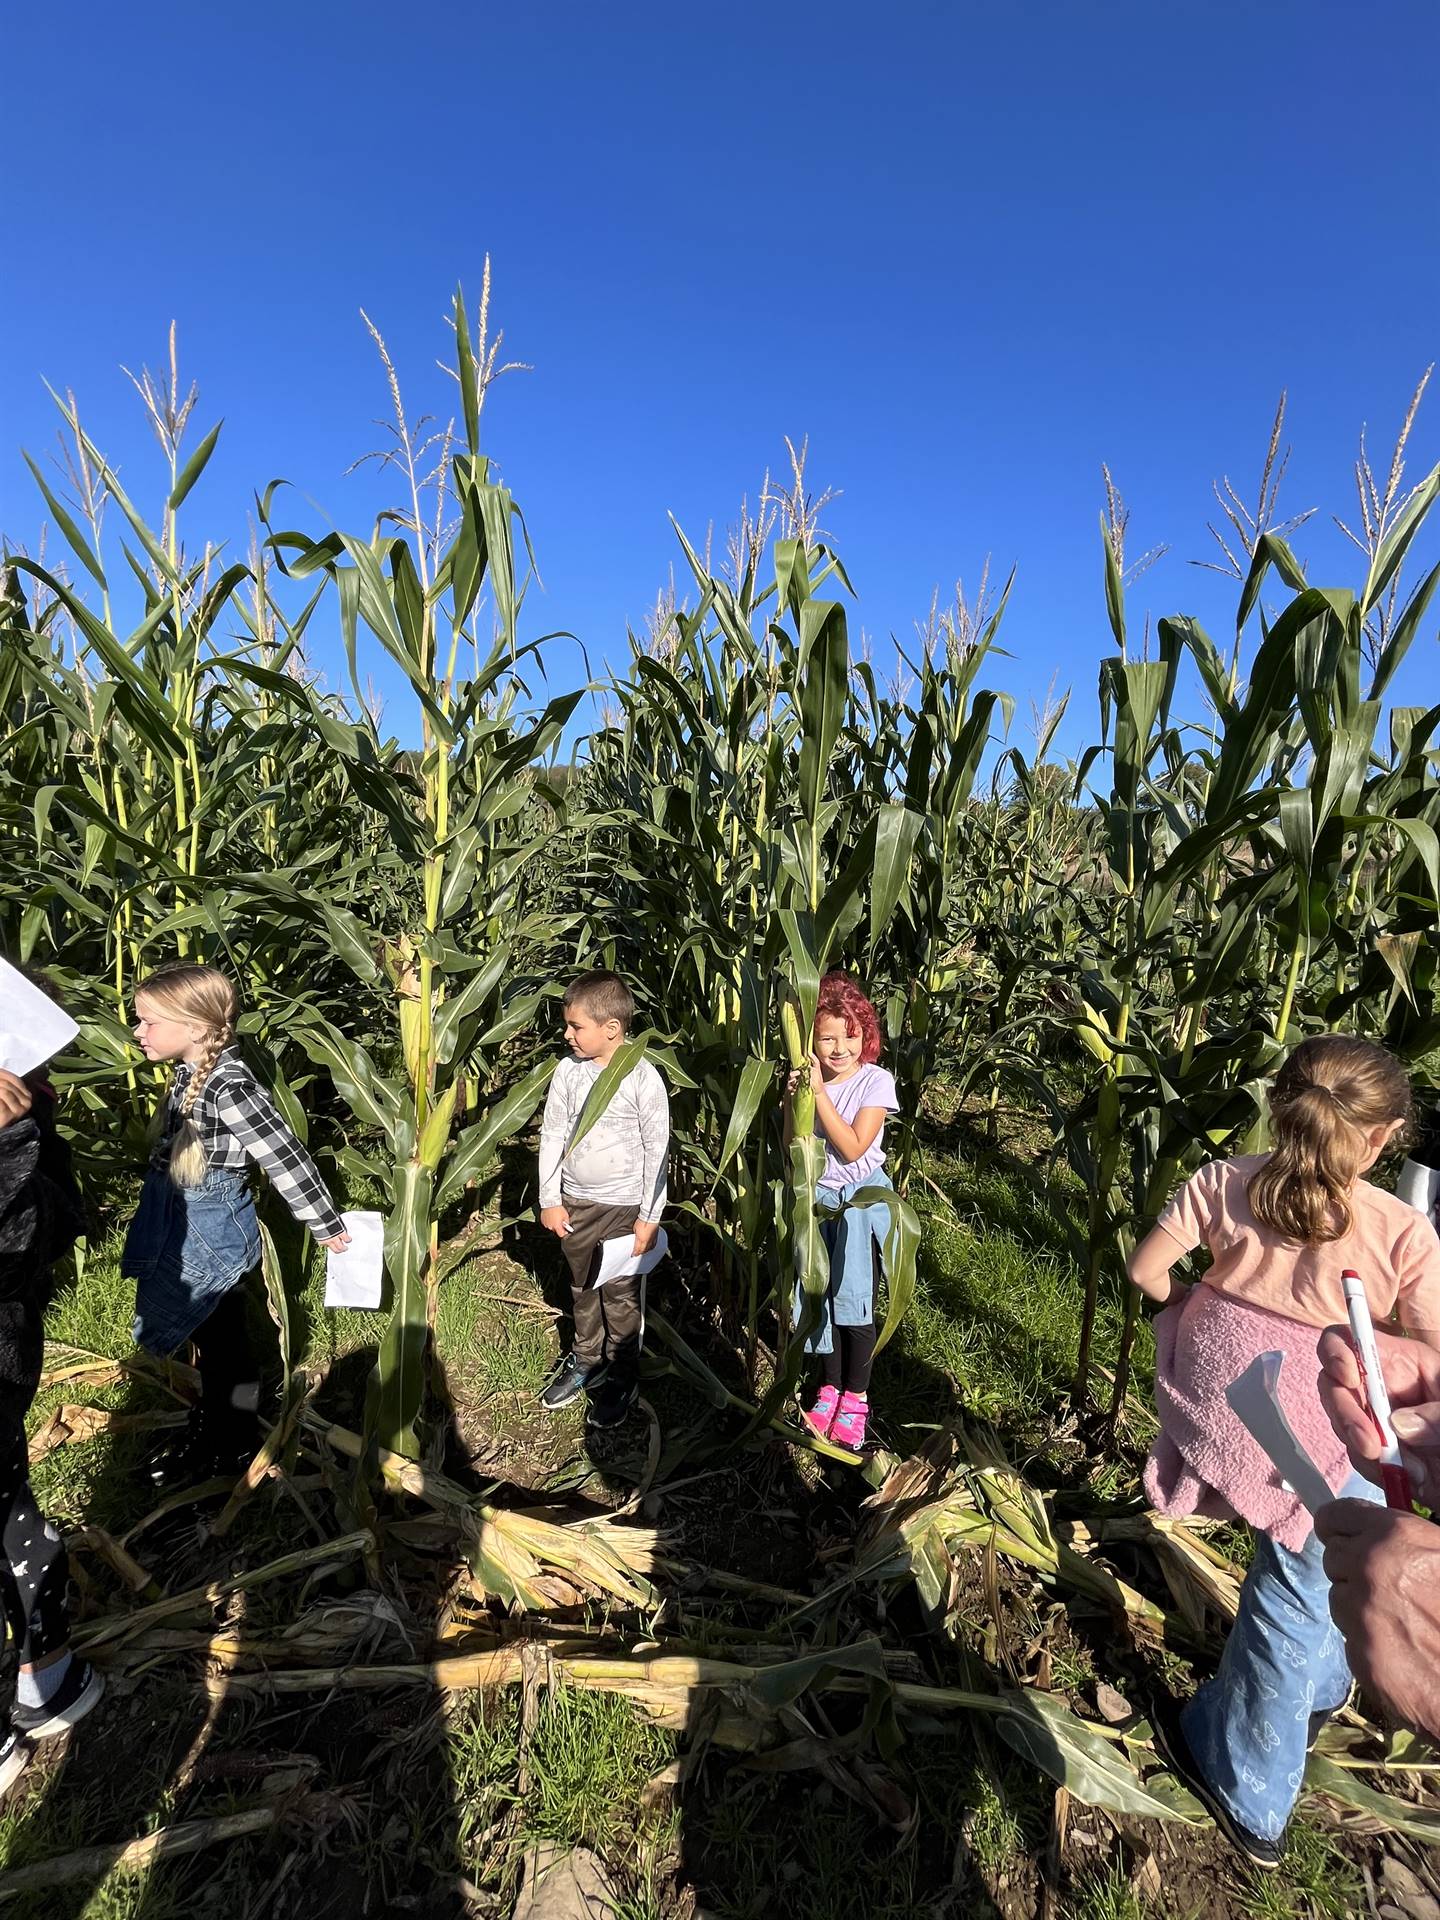 students in a corn field.